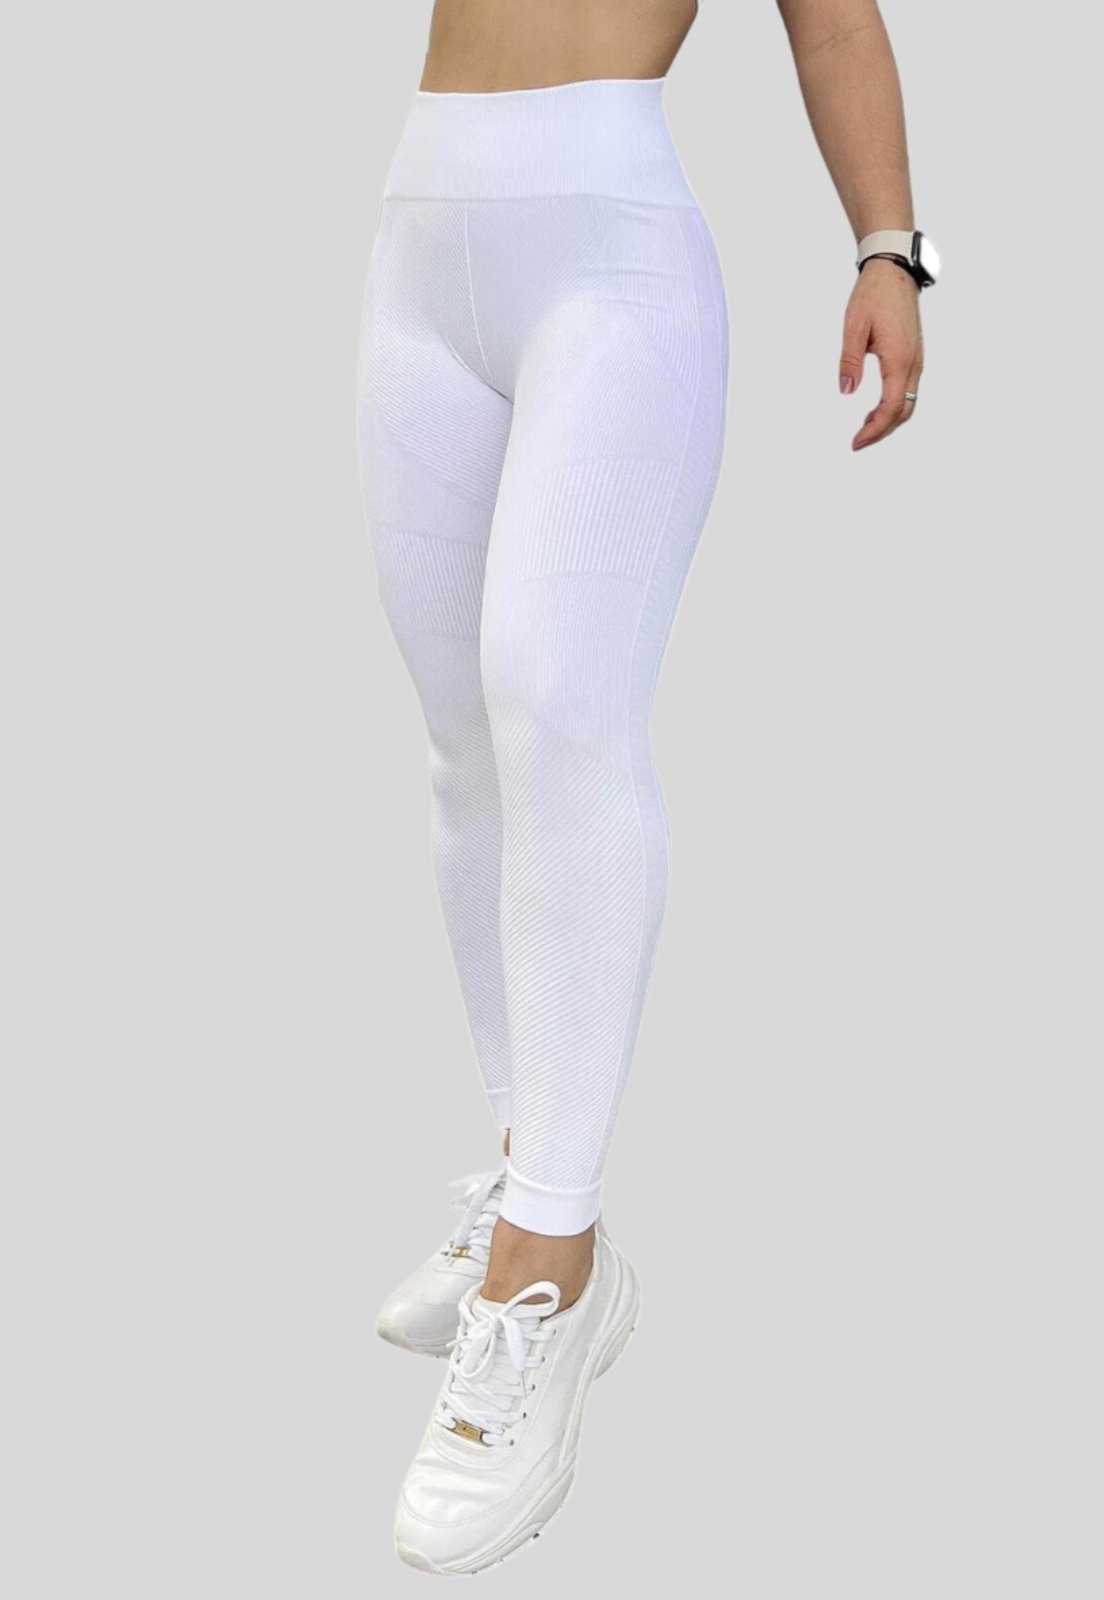 Calça legging branca support - Lett Sports